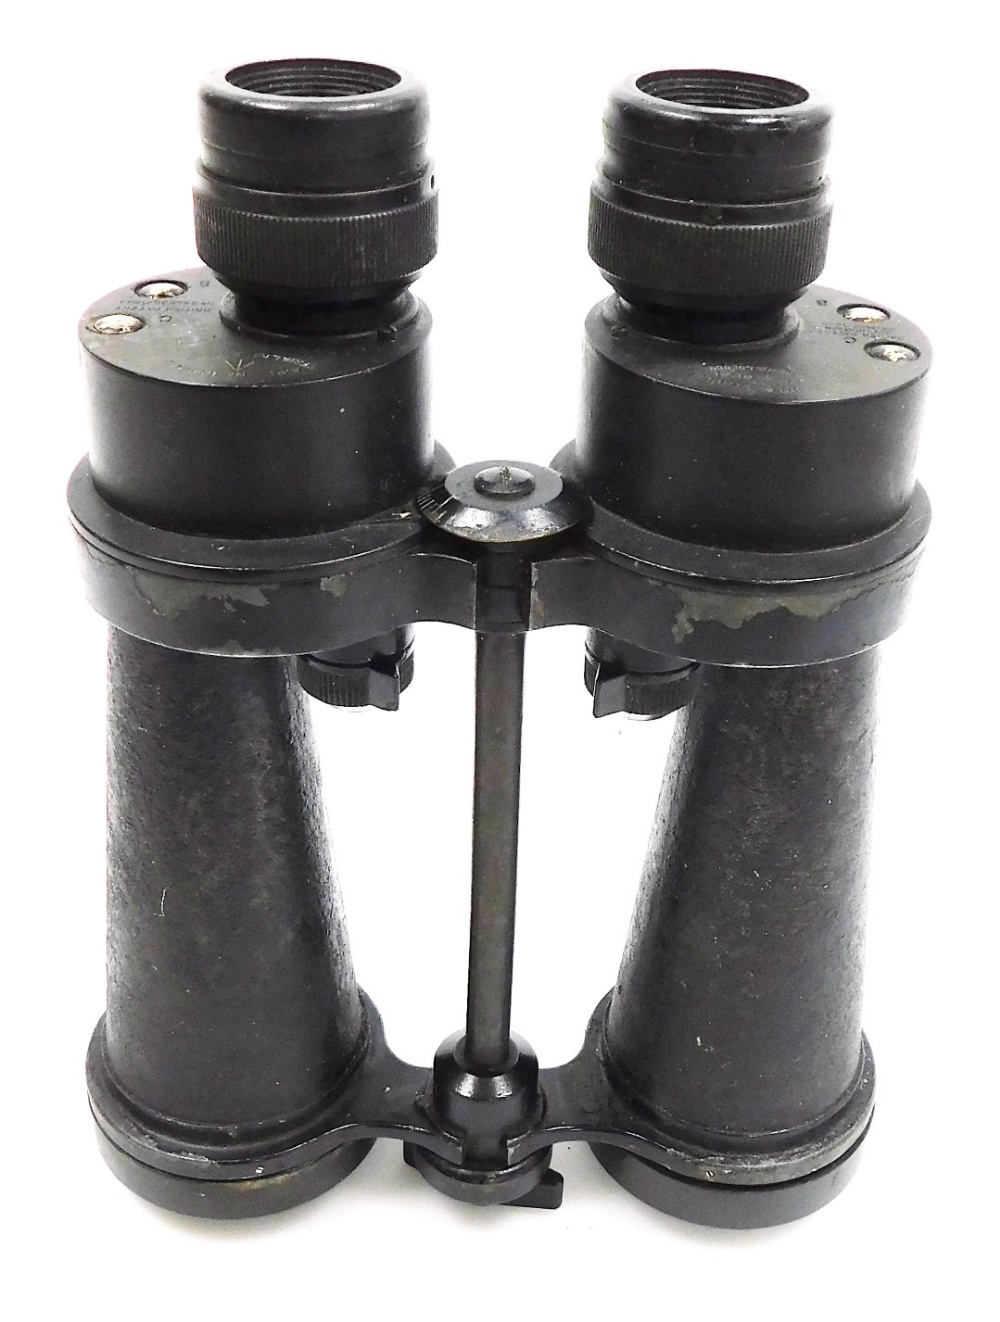 A pair of Barr & Stroud CF41 7x50 no. 1900A binoculars, serial no. 52659M.